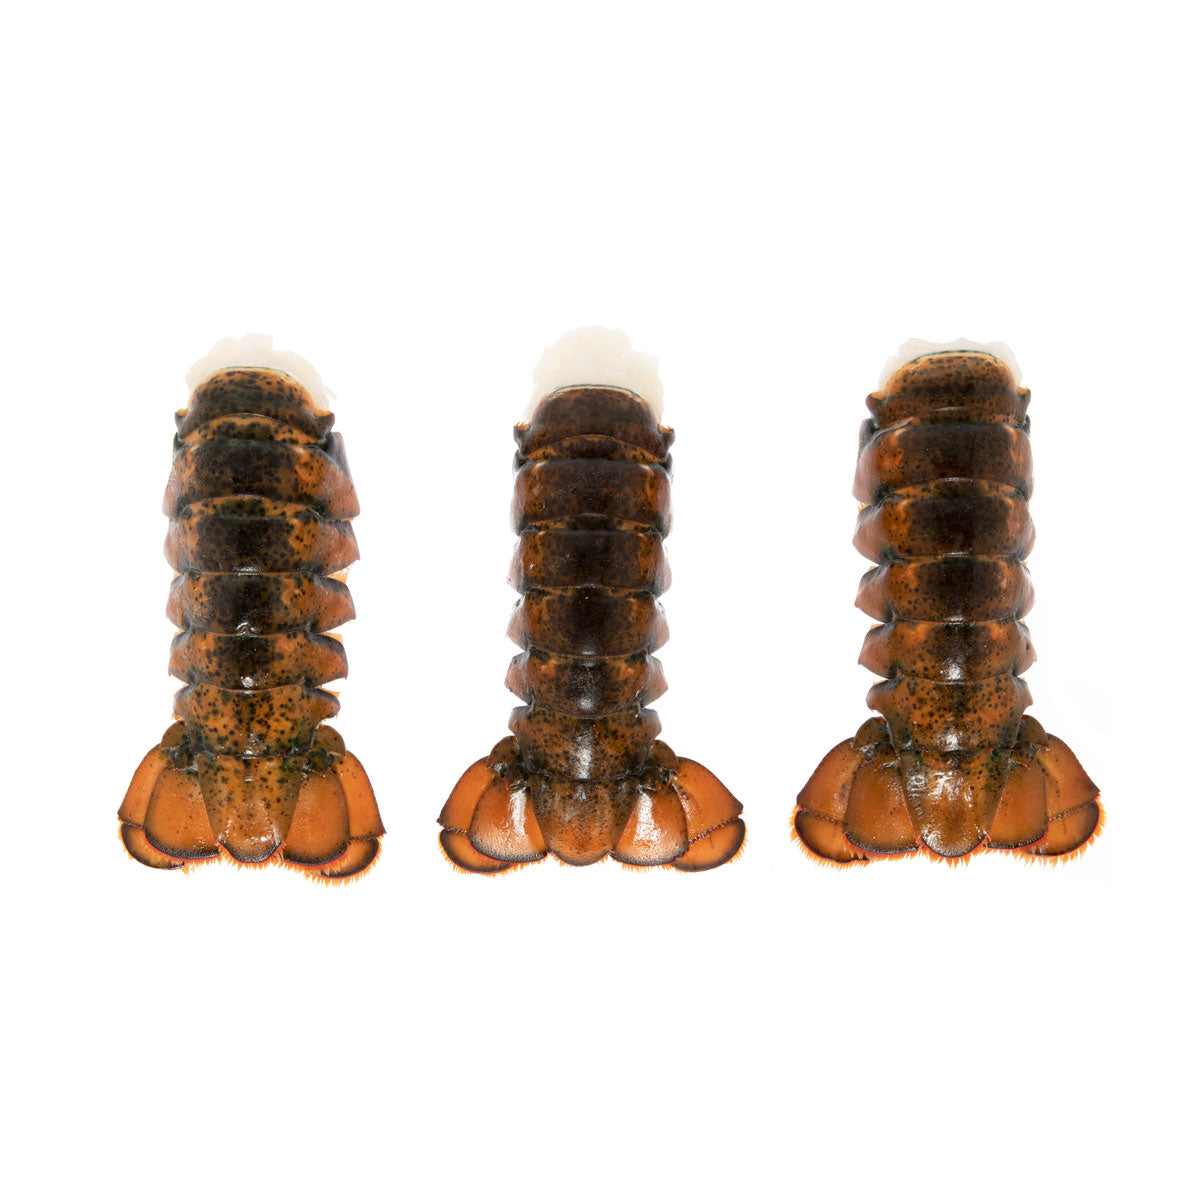 Greenhead Lobster Frozen Lobster Tails 5-6 Oz Box